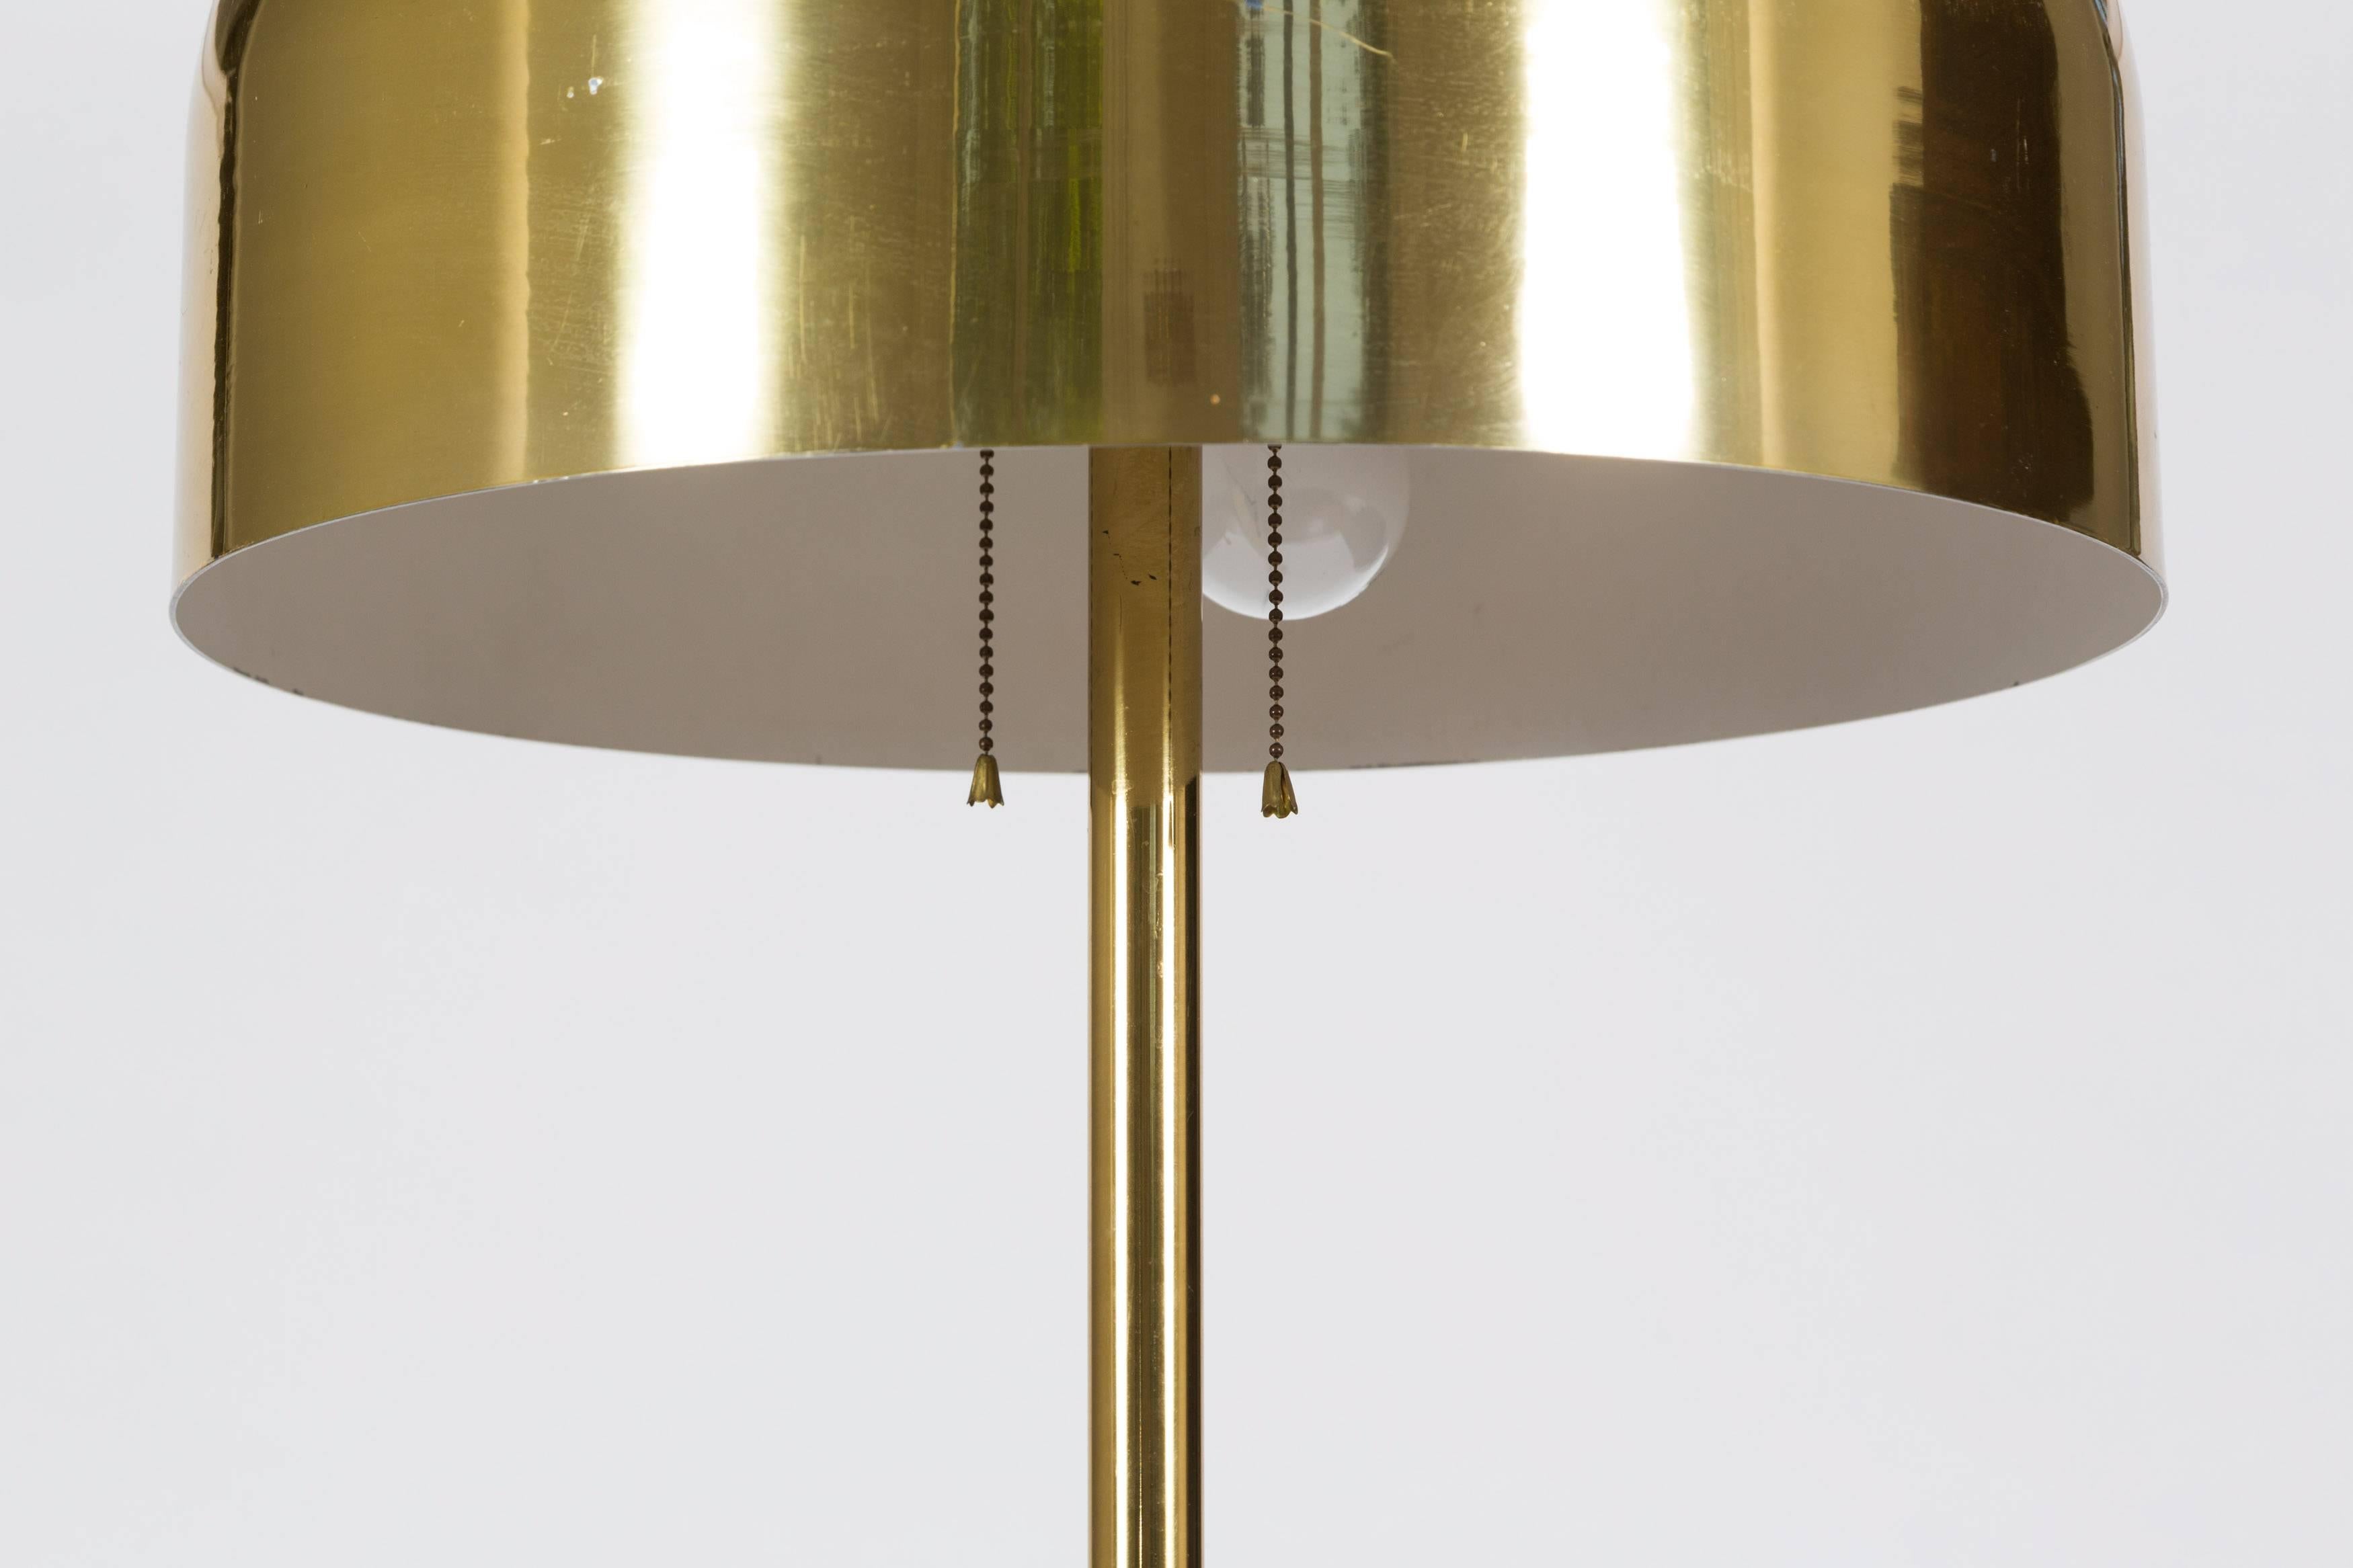 Midcentury Italian brass floor lamp with large brass shade, 1960s.